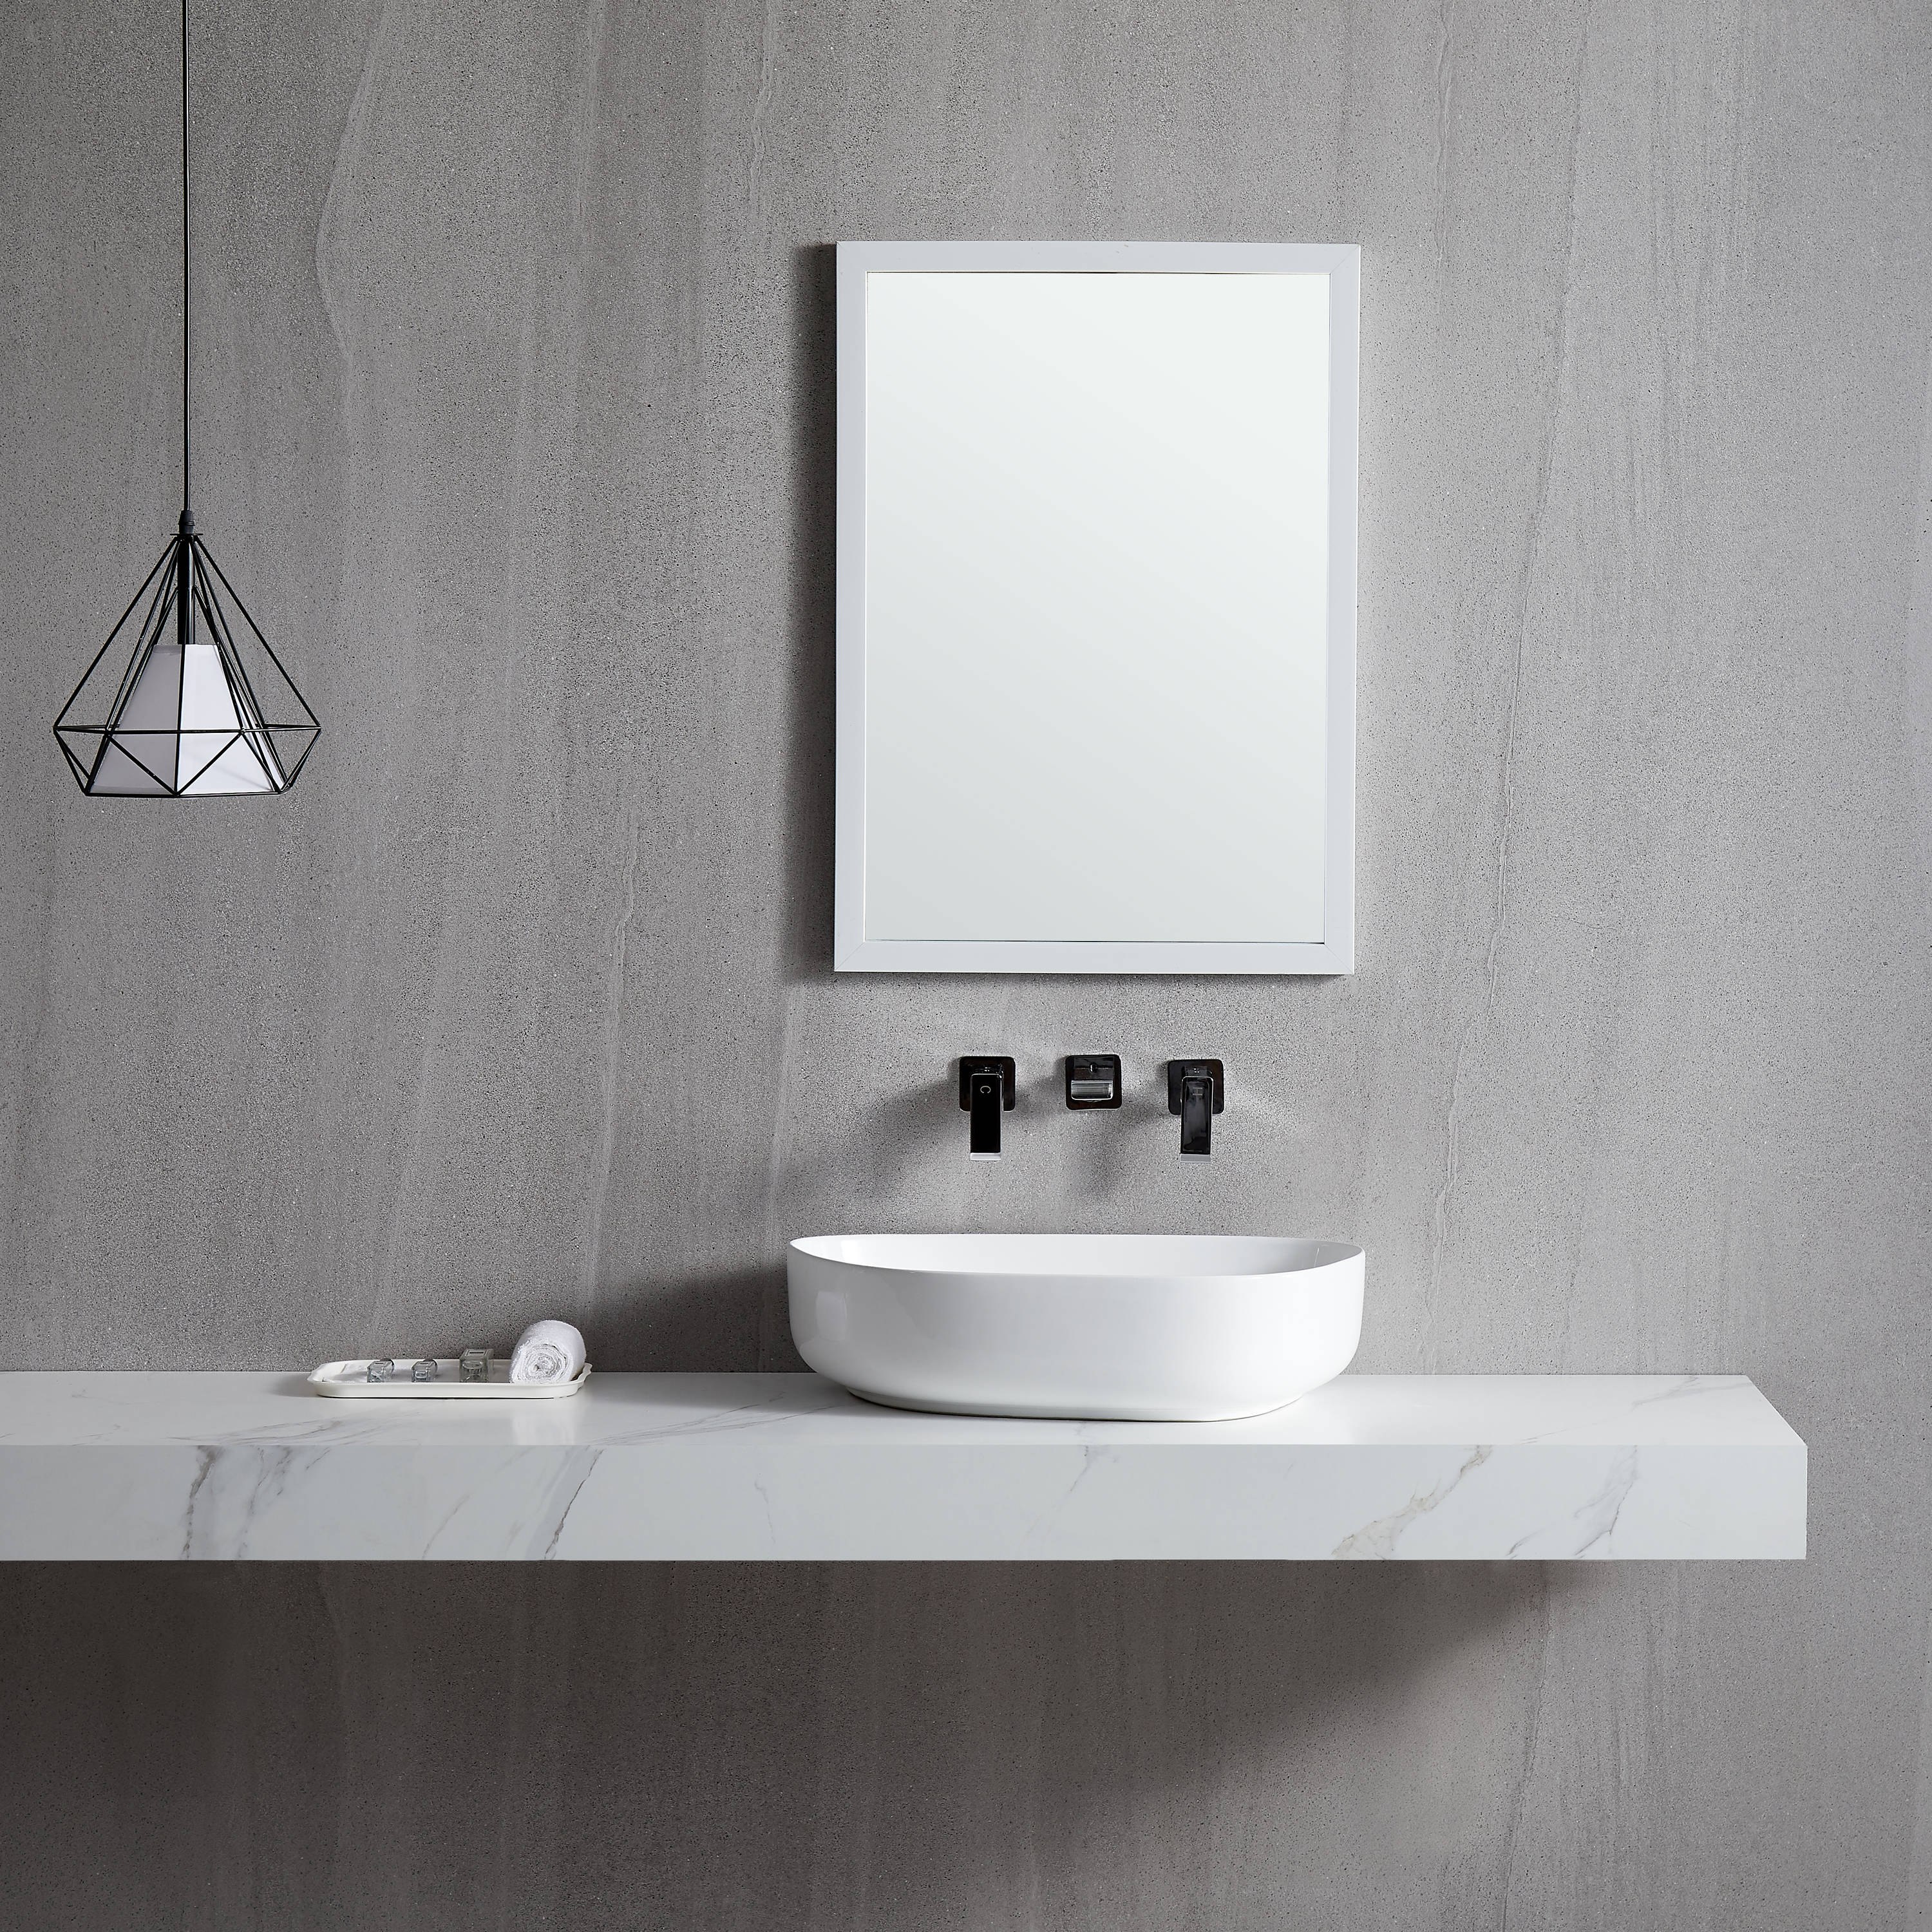 CASAINC White Ceramic Vessel Oval Modern Bathroom Sink (21.65-in x 15. ...